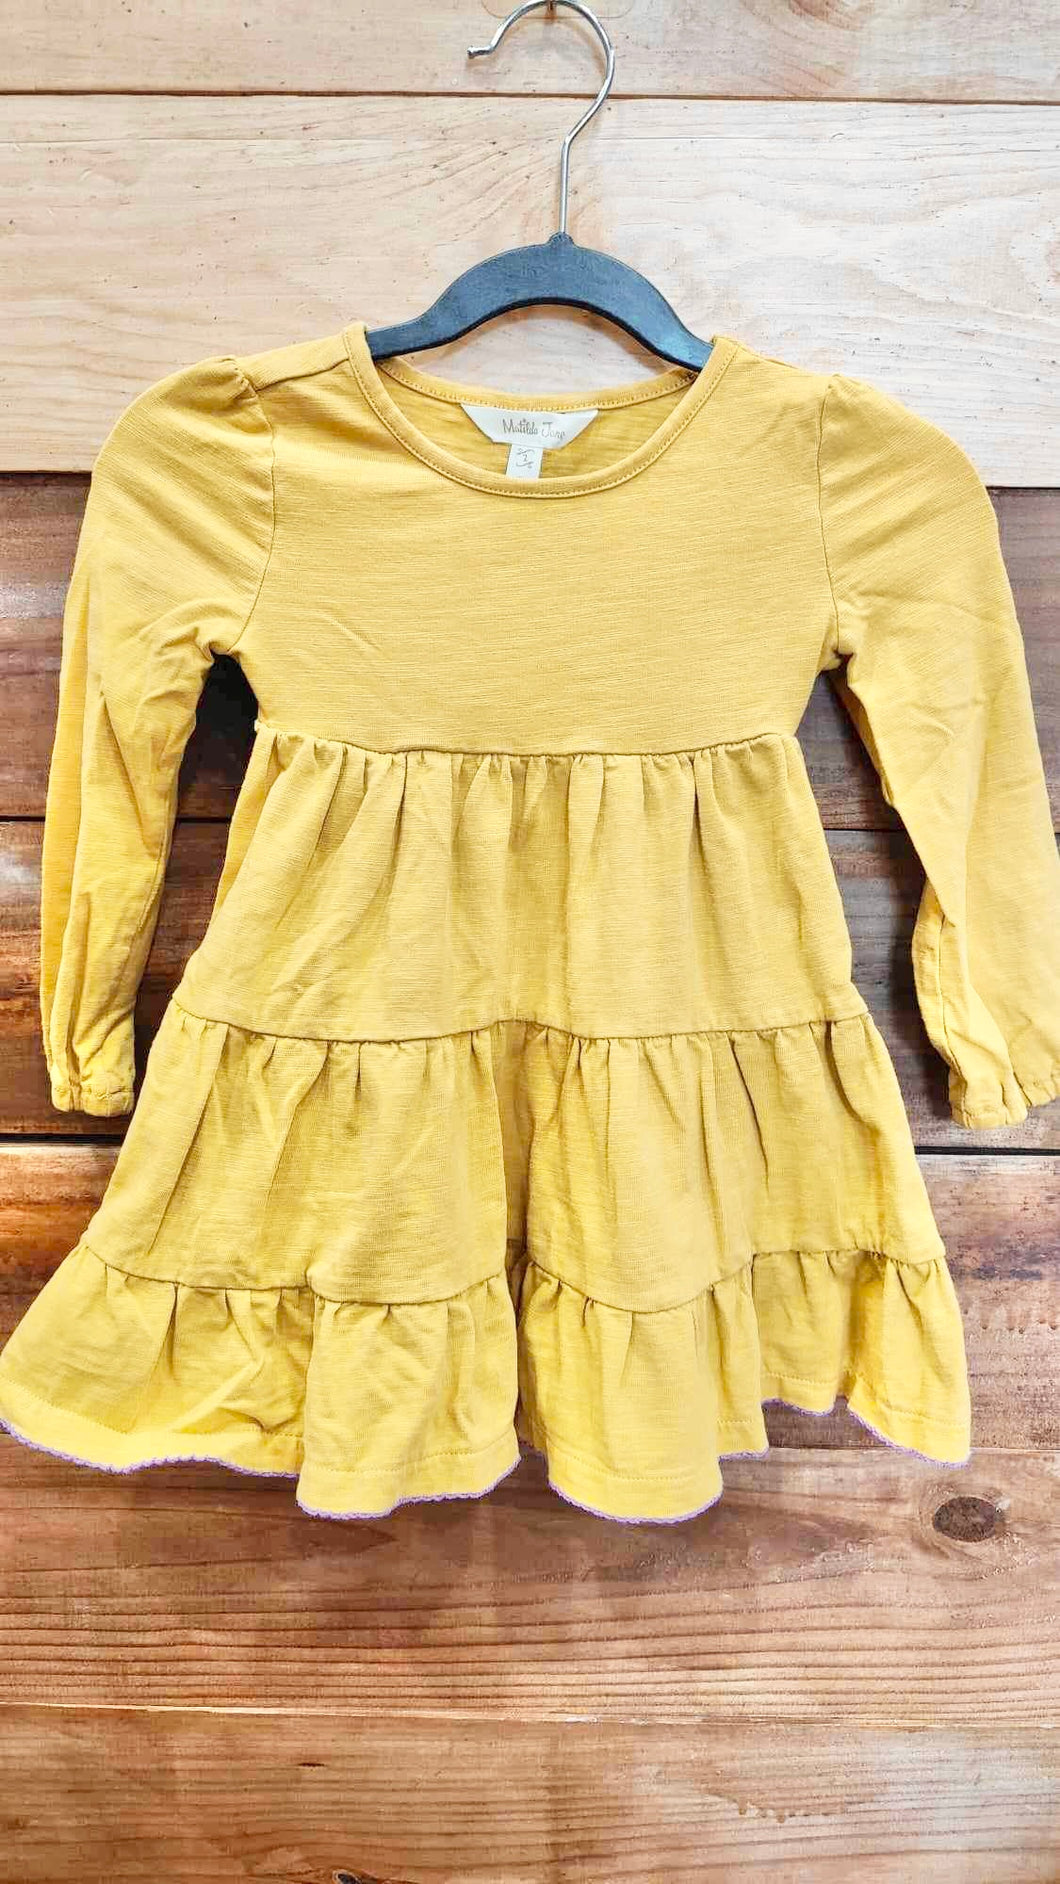 Matilda Jane Golden Yellow Dress Size 2